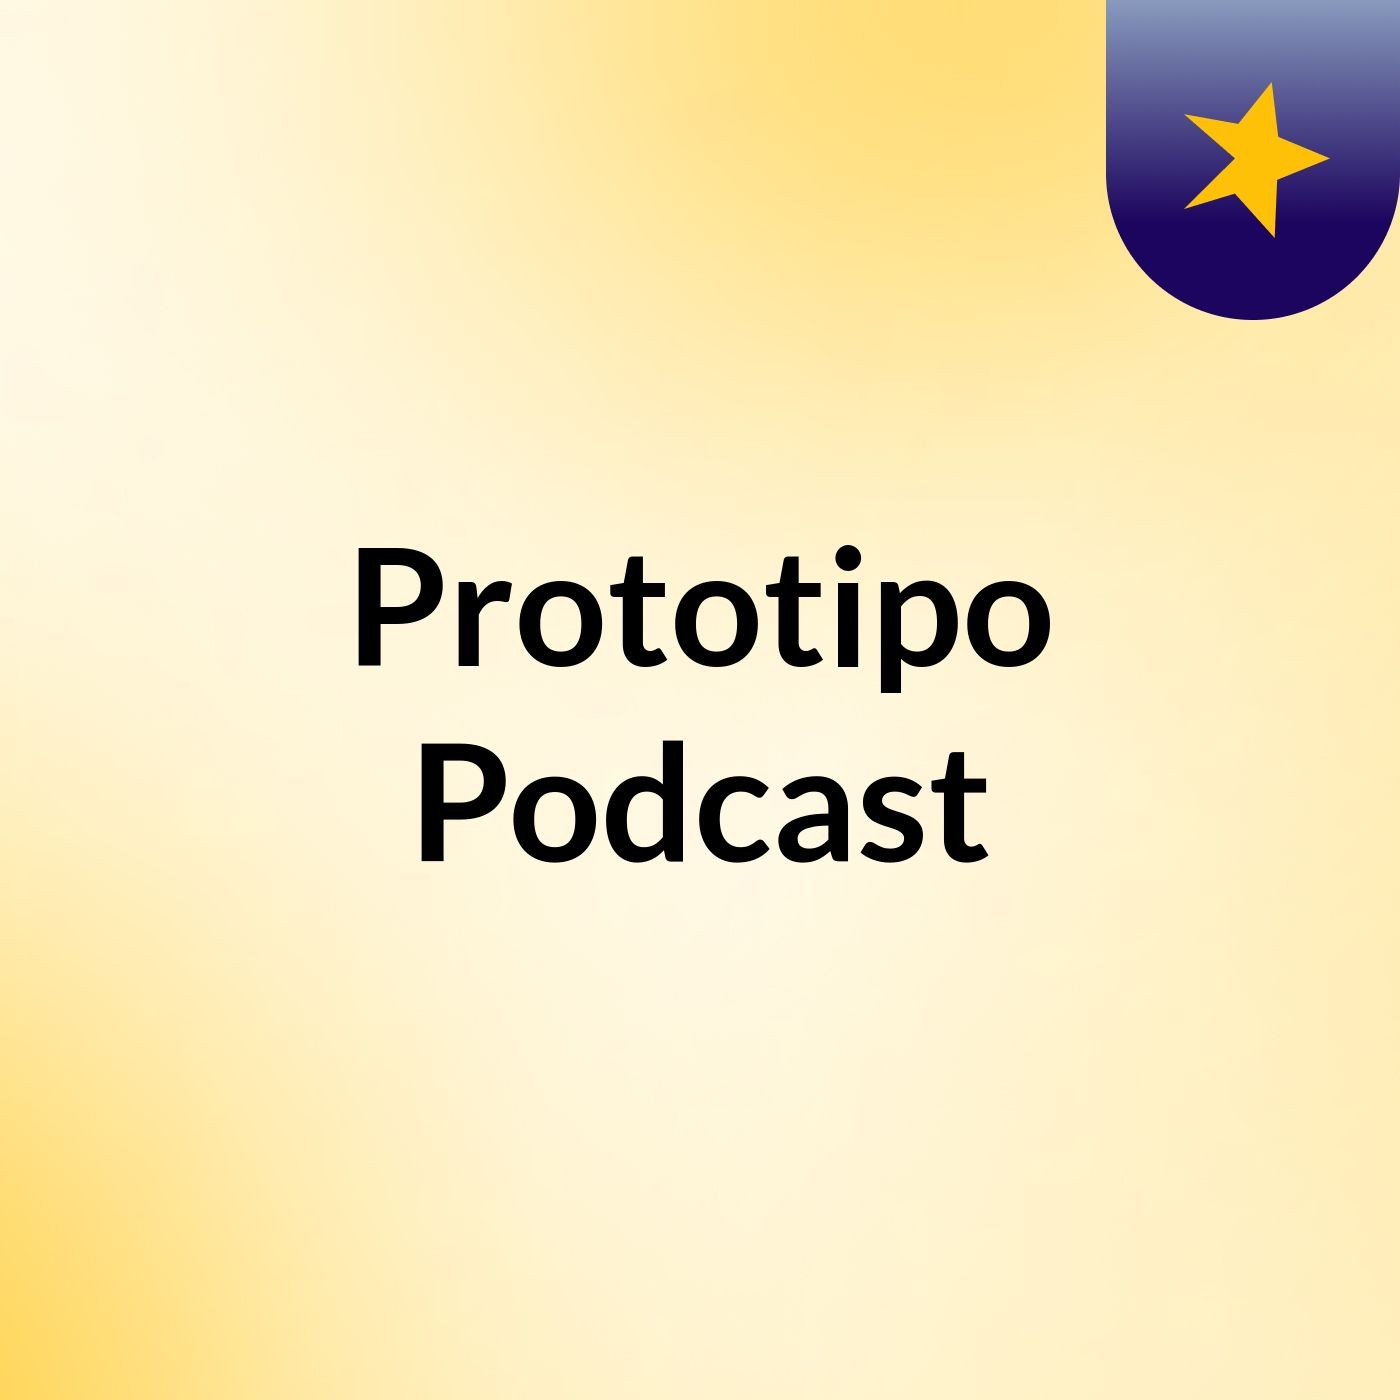 Prototipo Podcast